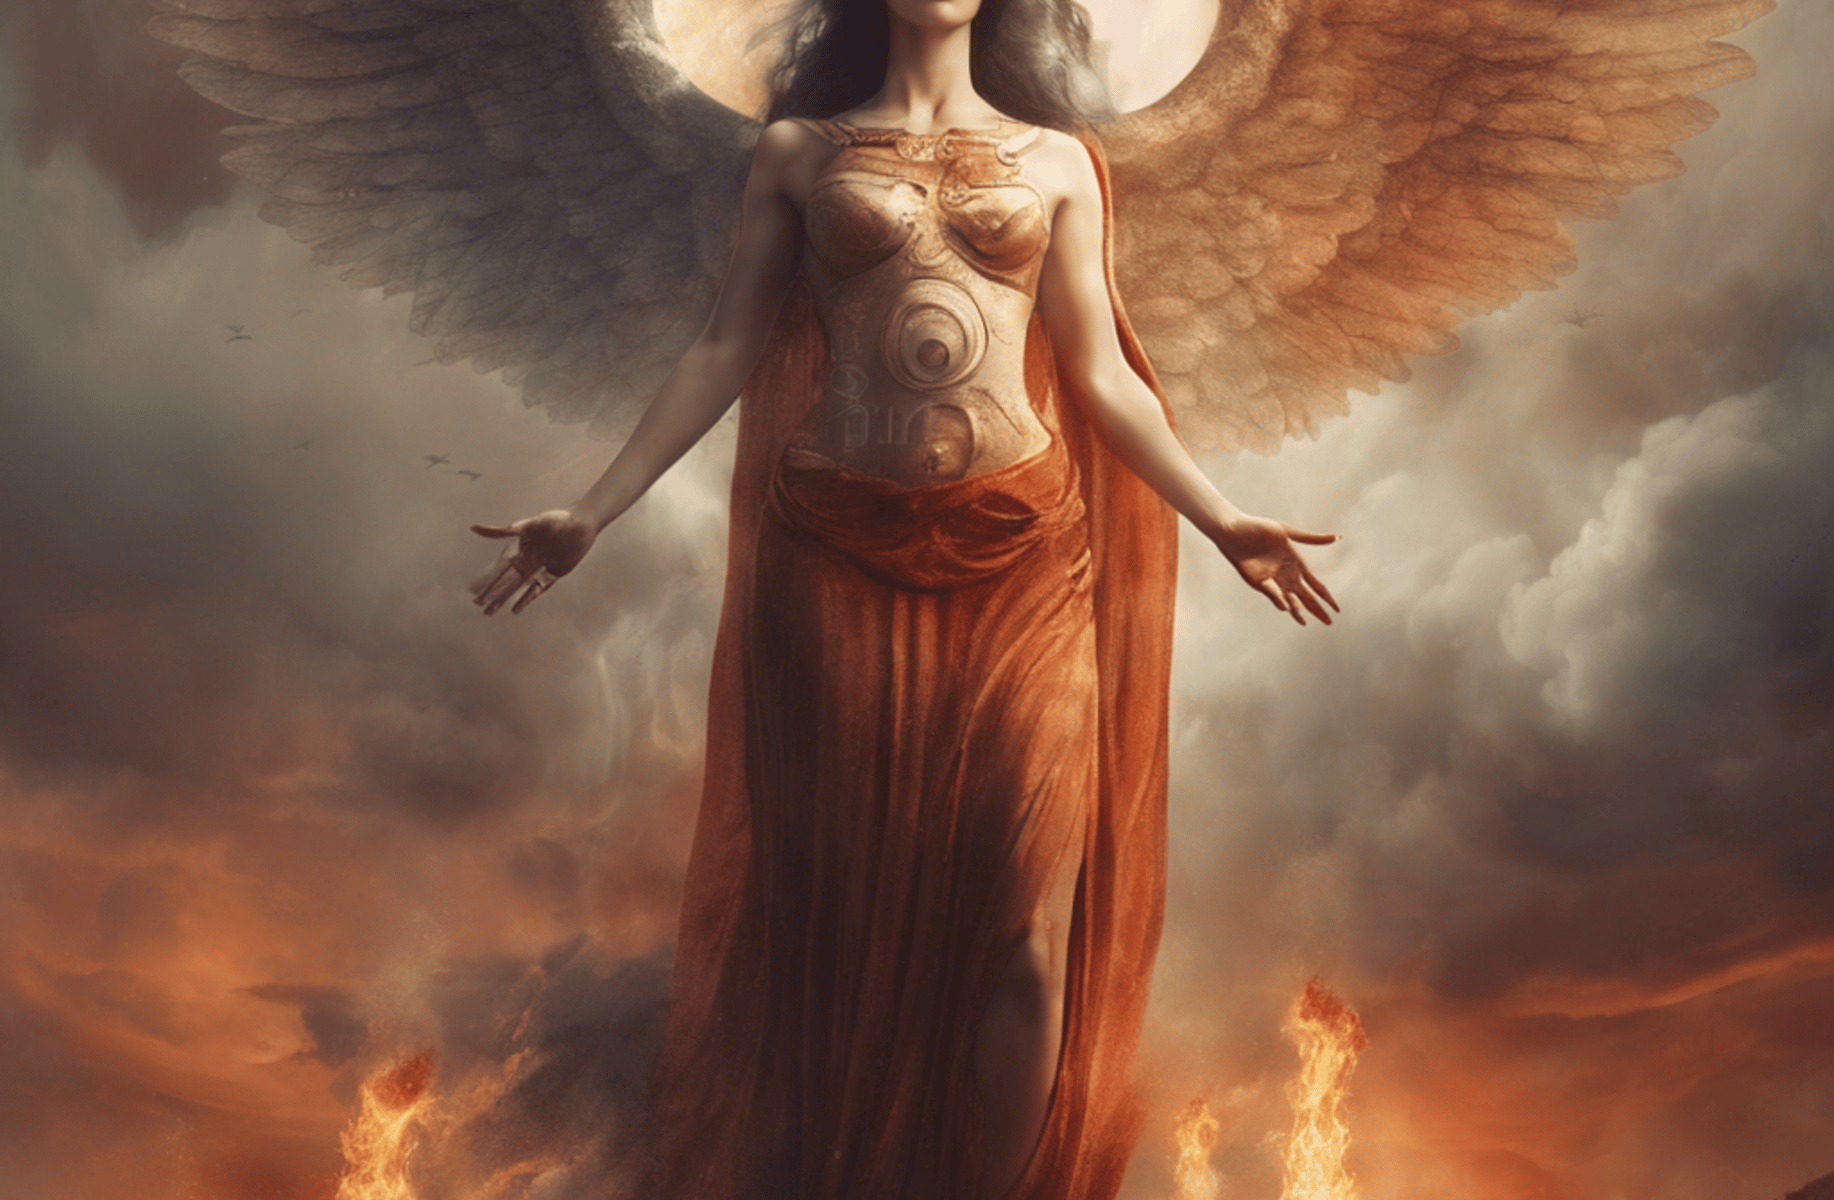 Goddess of hell/heave